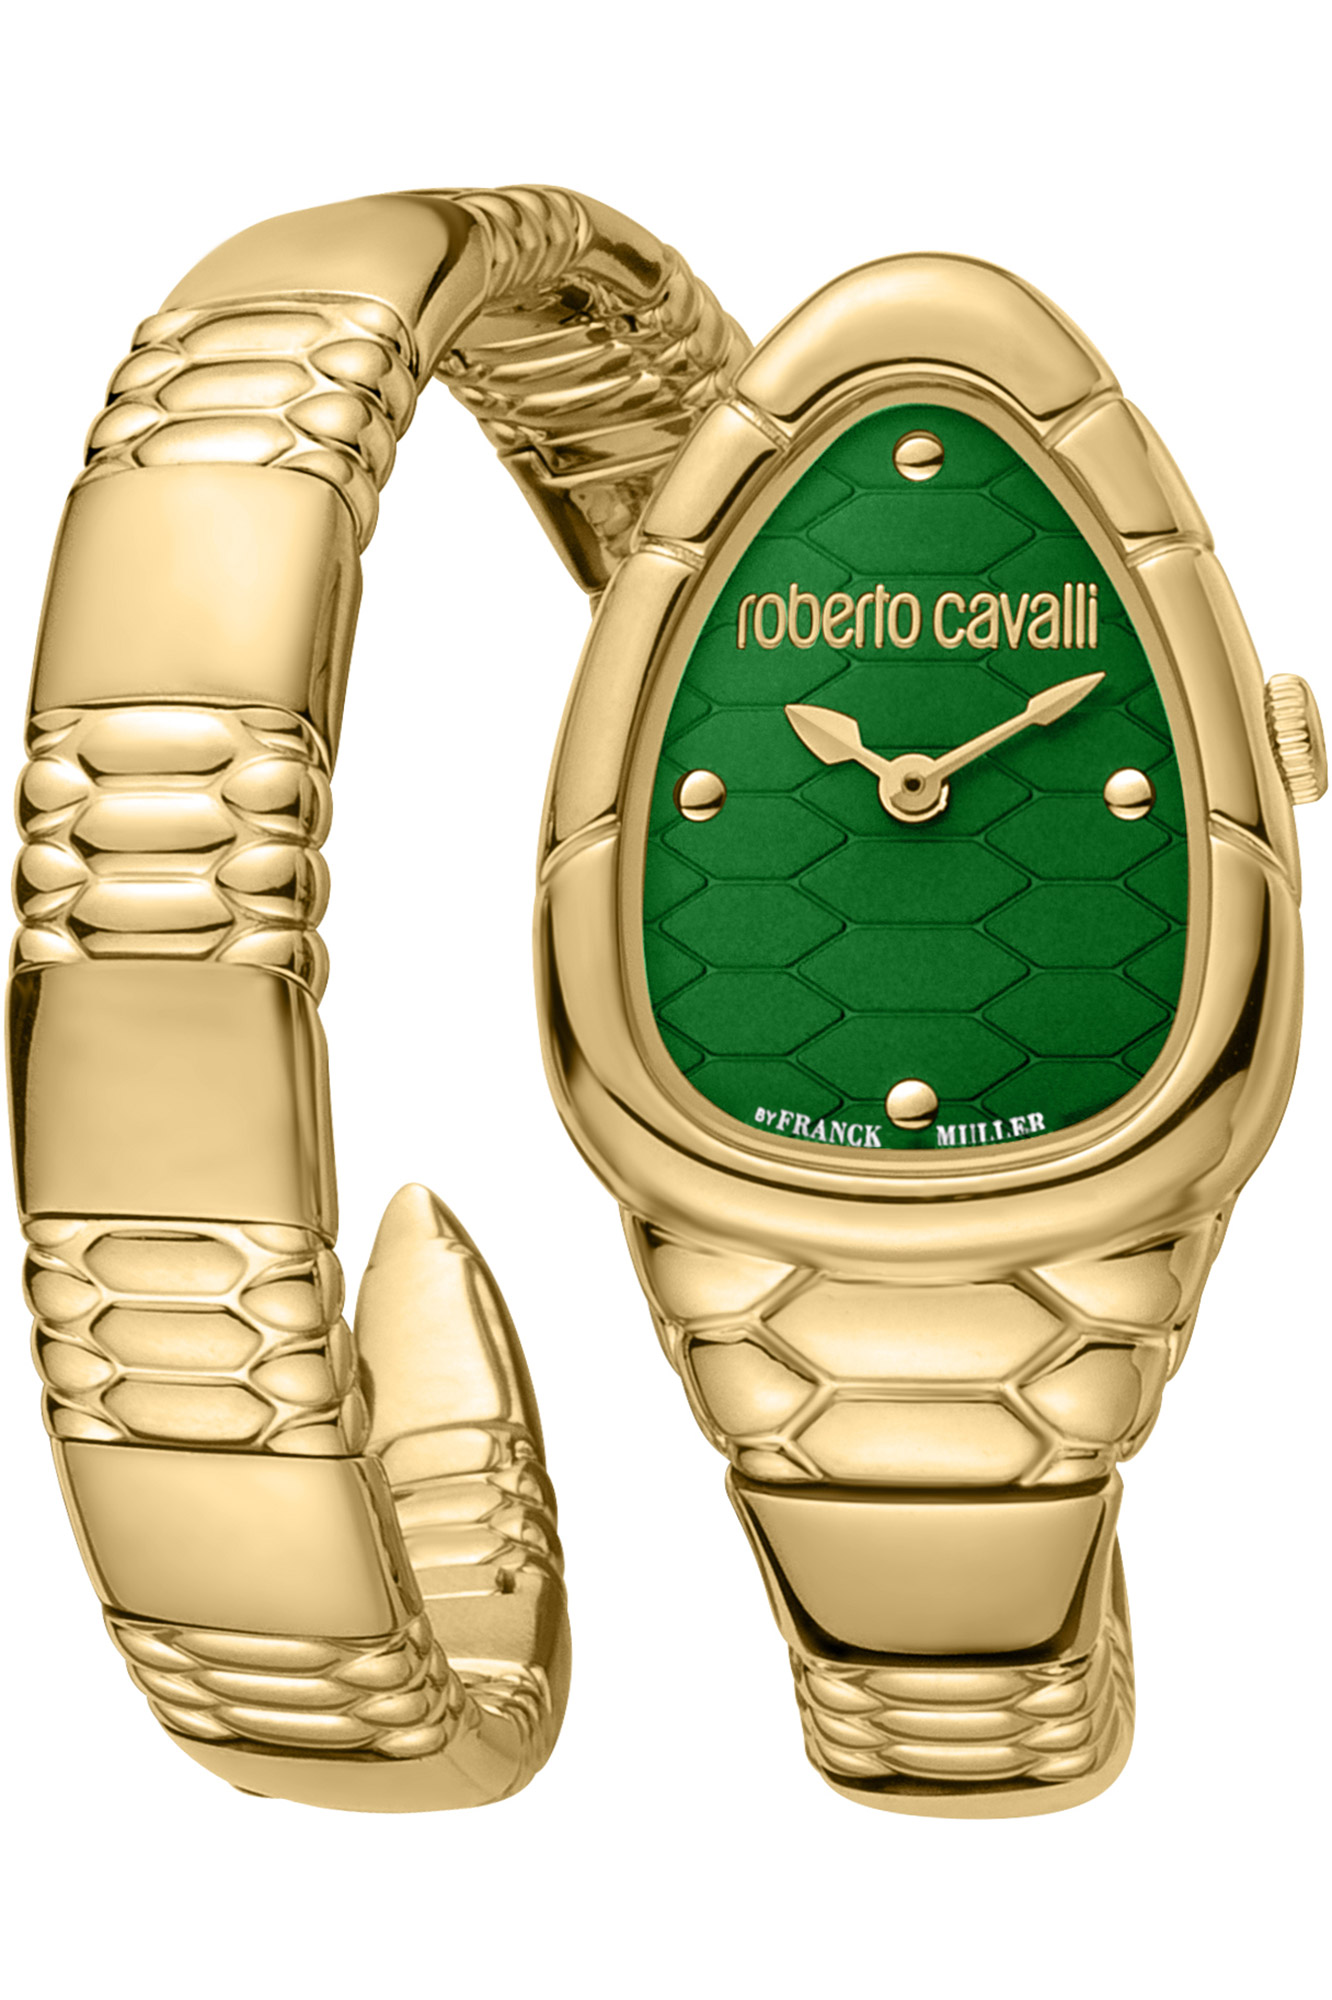 Orologio Roberto Cavalli by Franck Muller rv1l184m0041